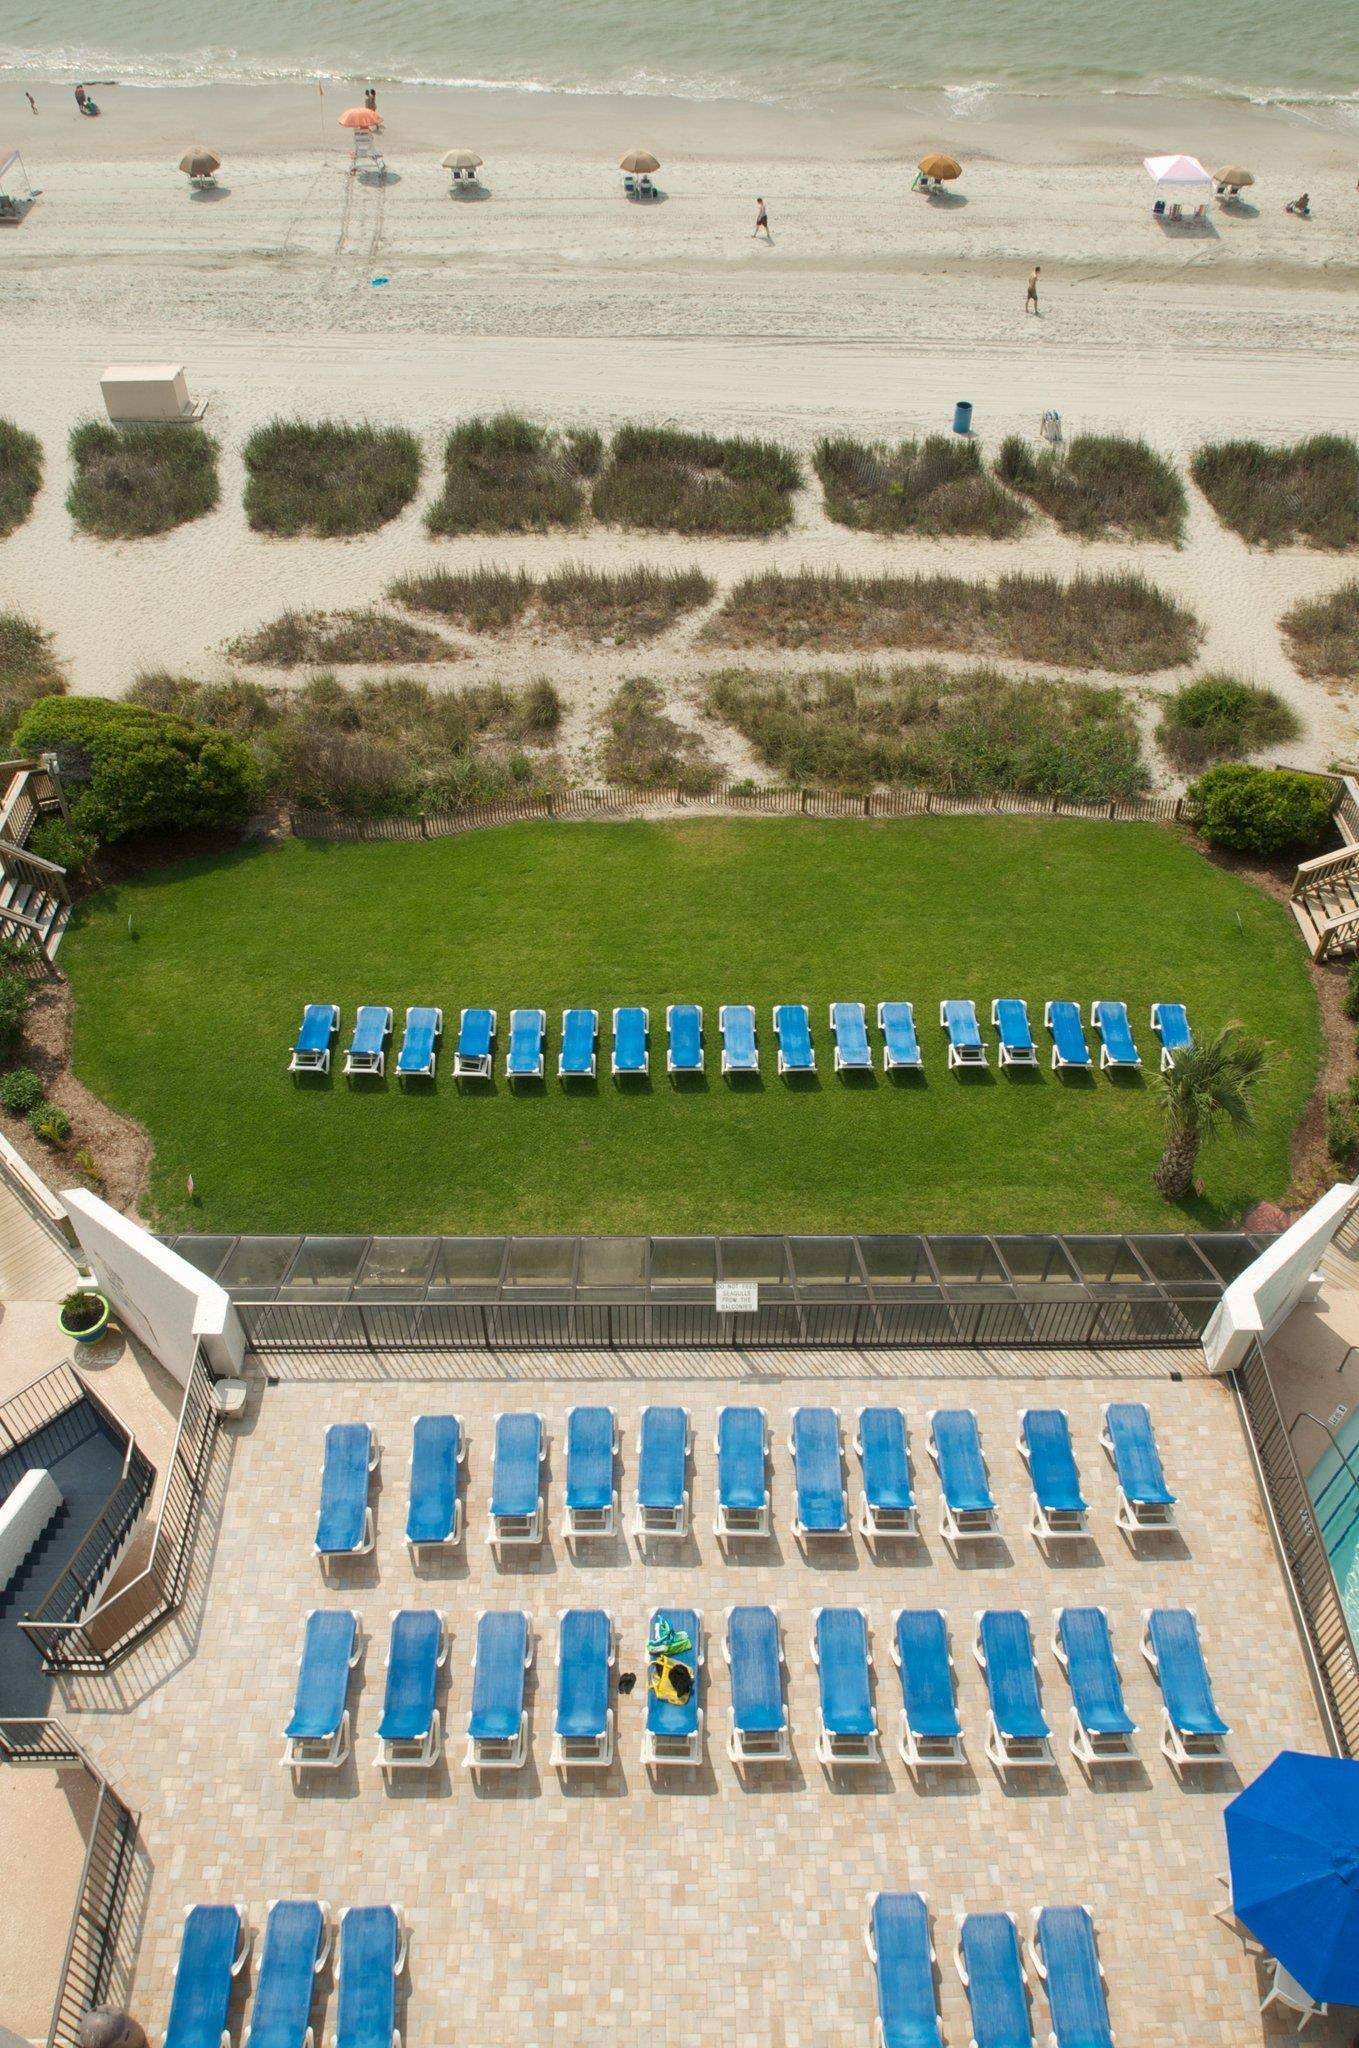 Ocean Park Resort